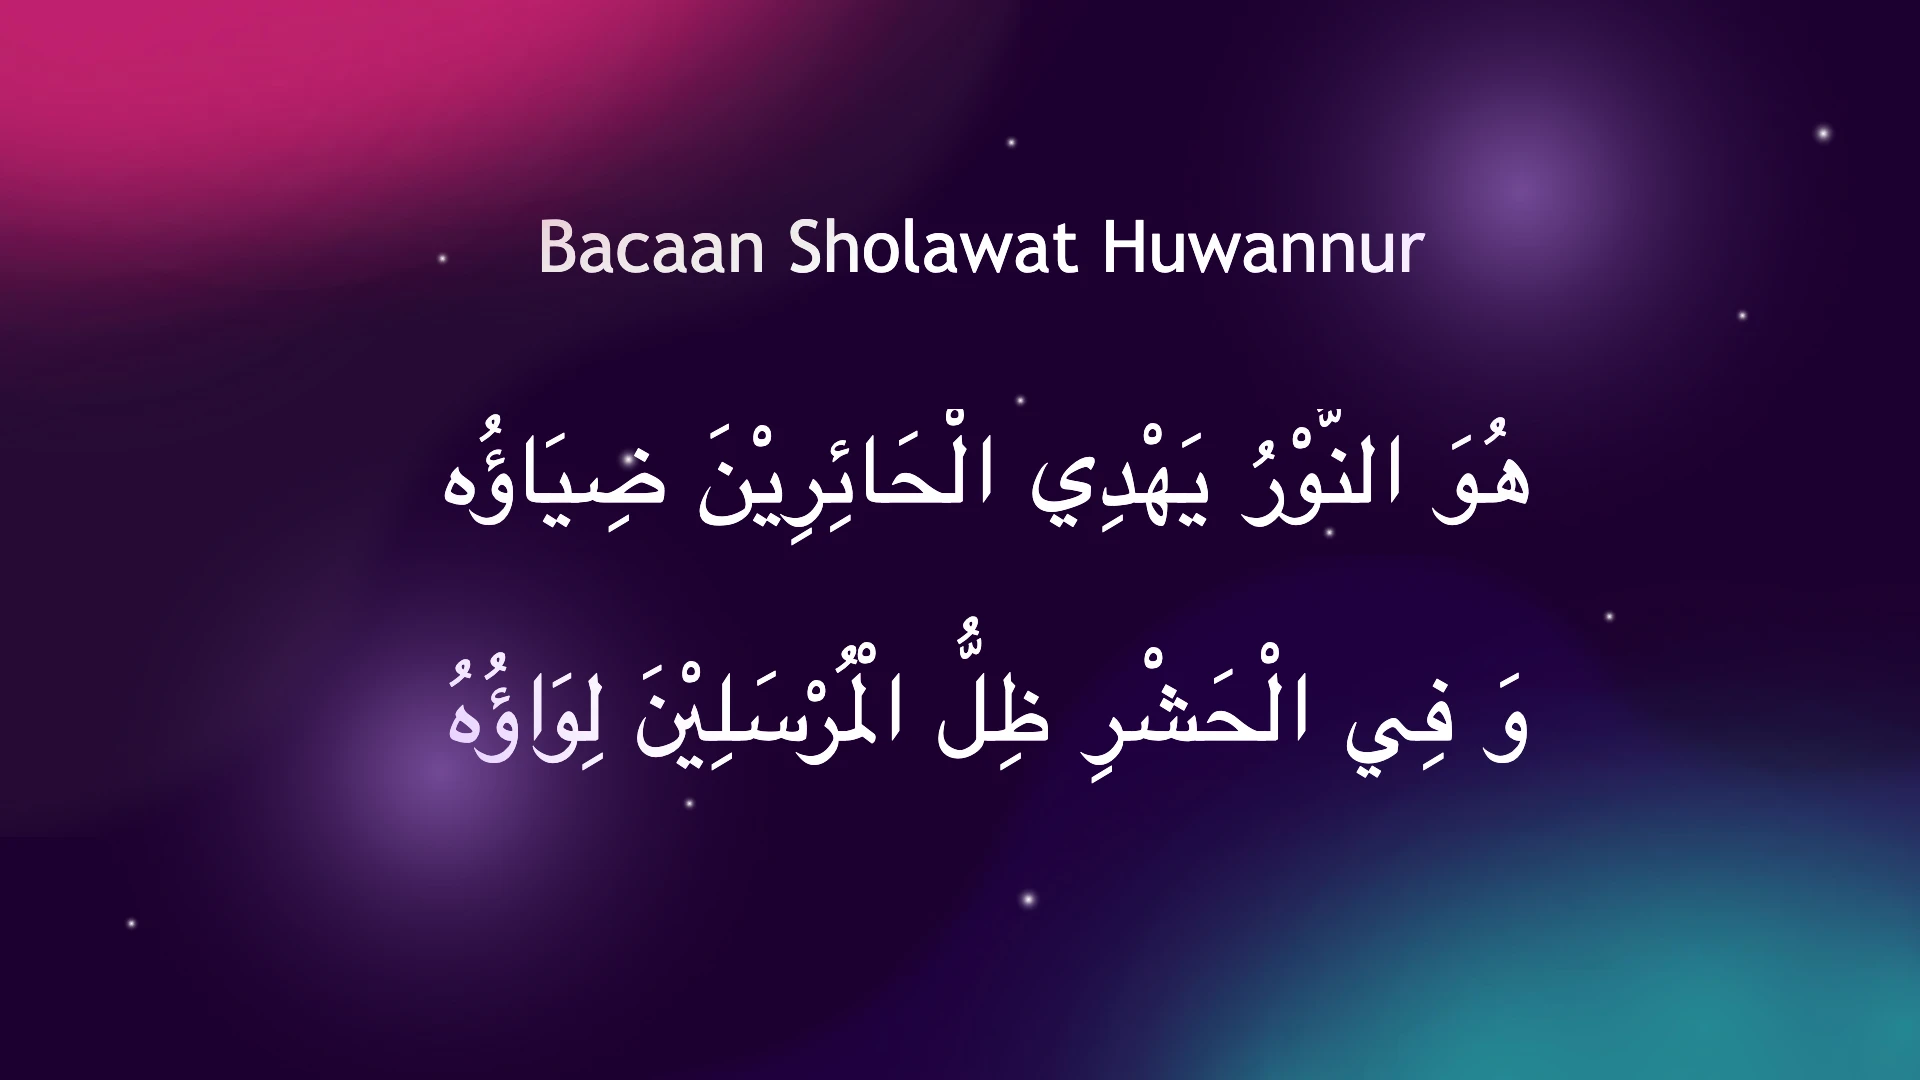 Bacaan Sholawat Huwannur